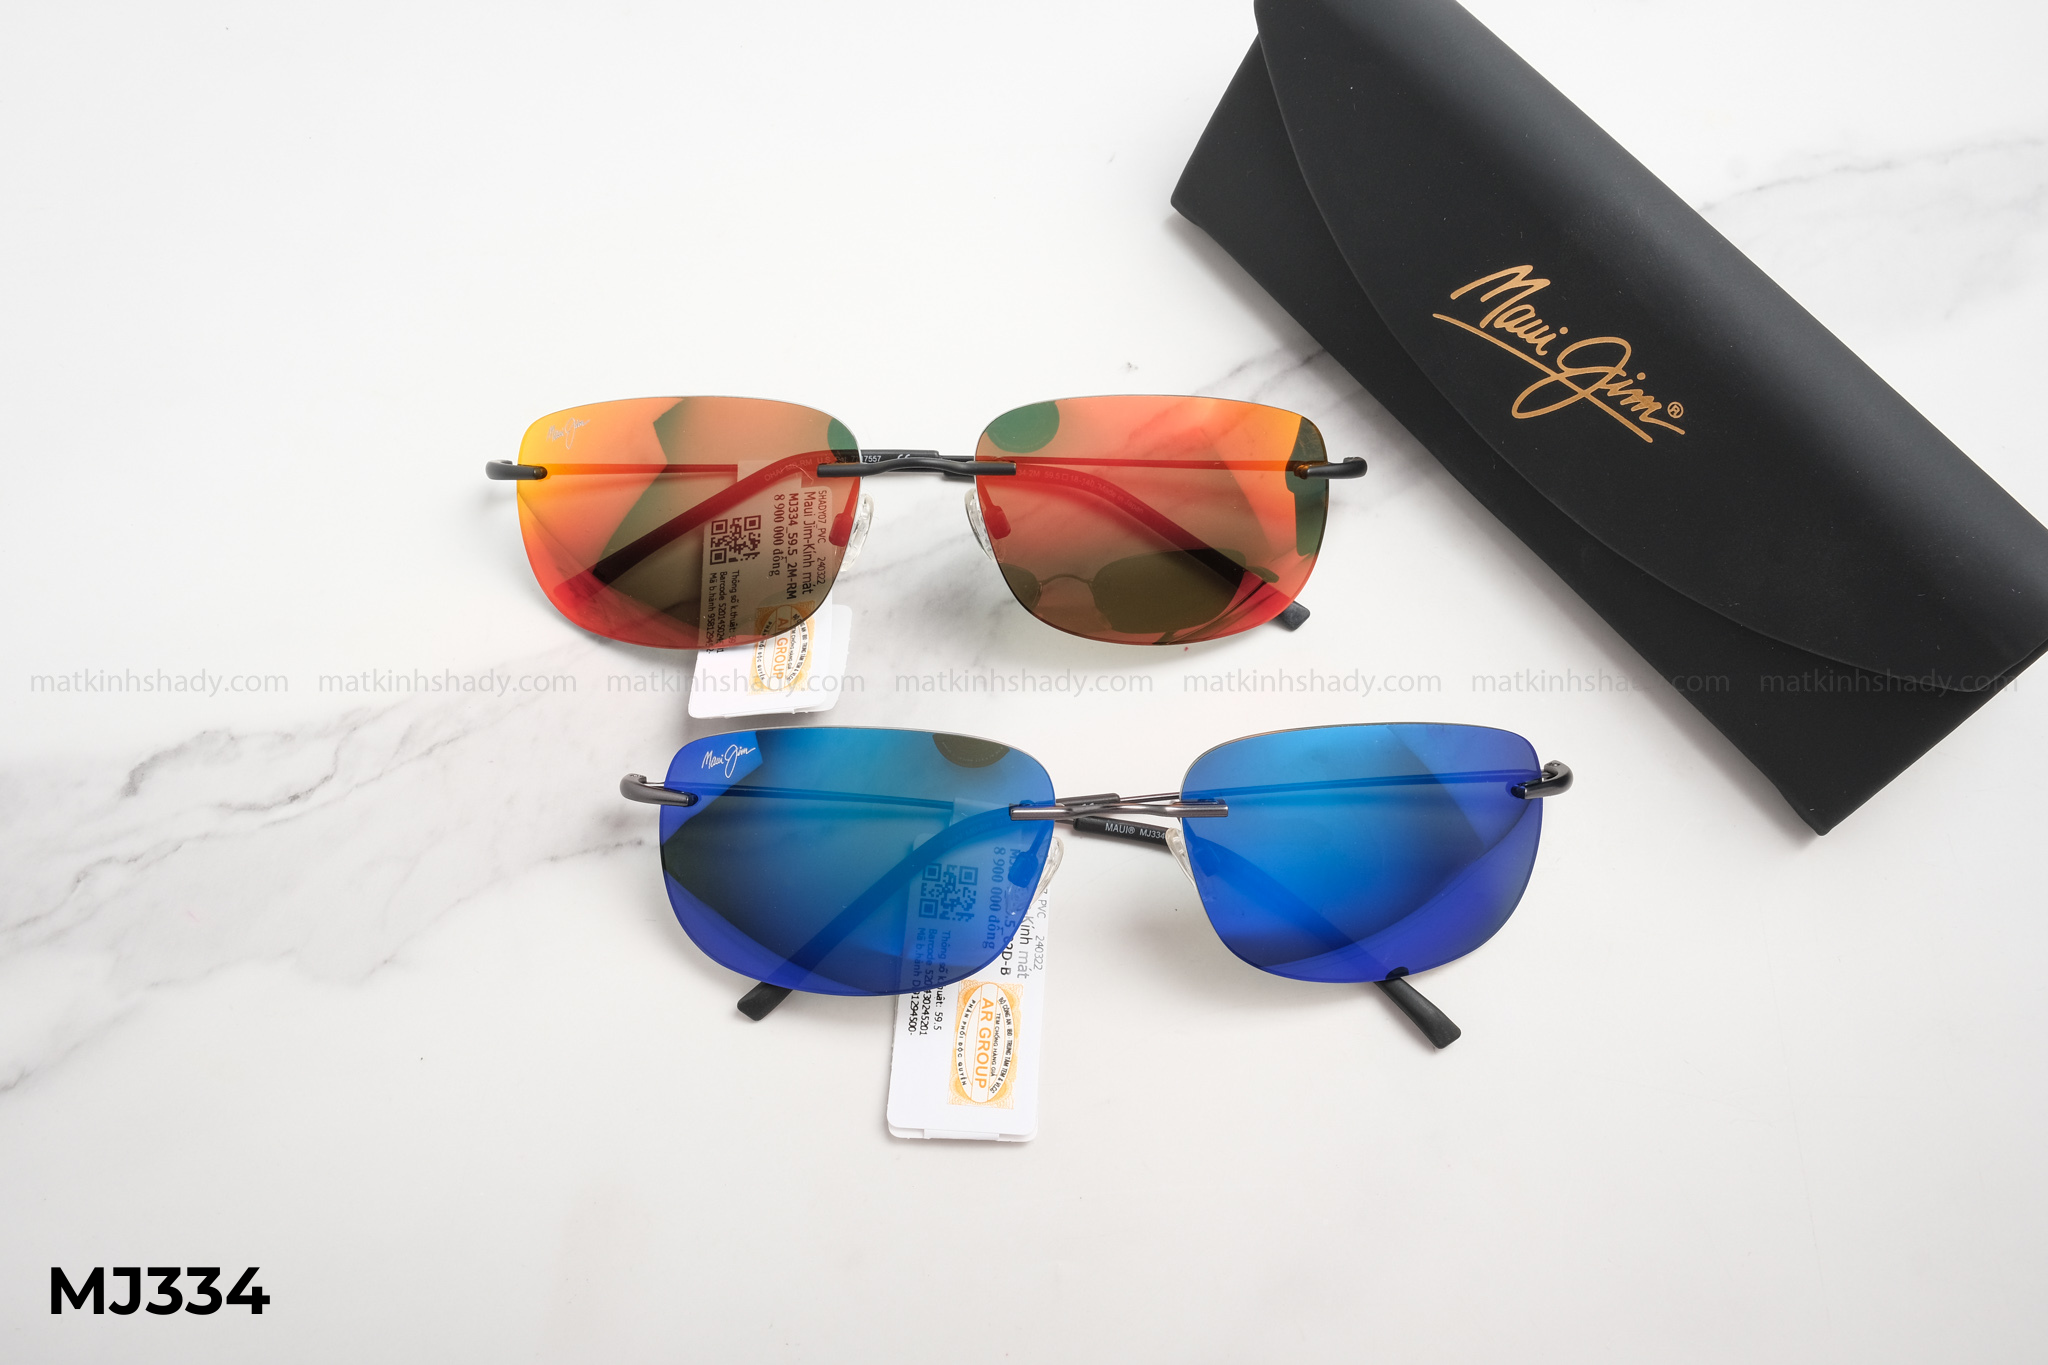  Maui Jim Eyewear - Sunglasses - MJ334 